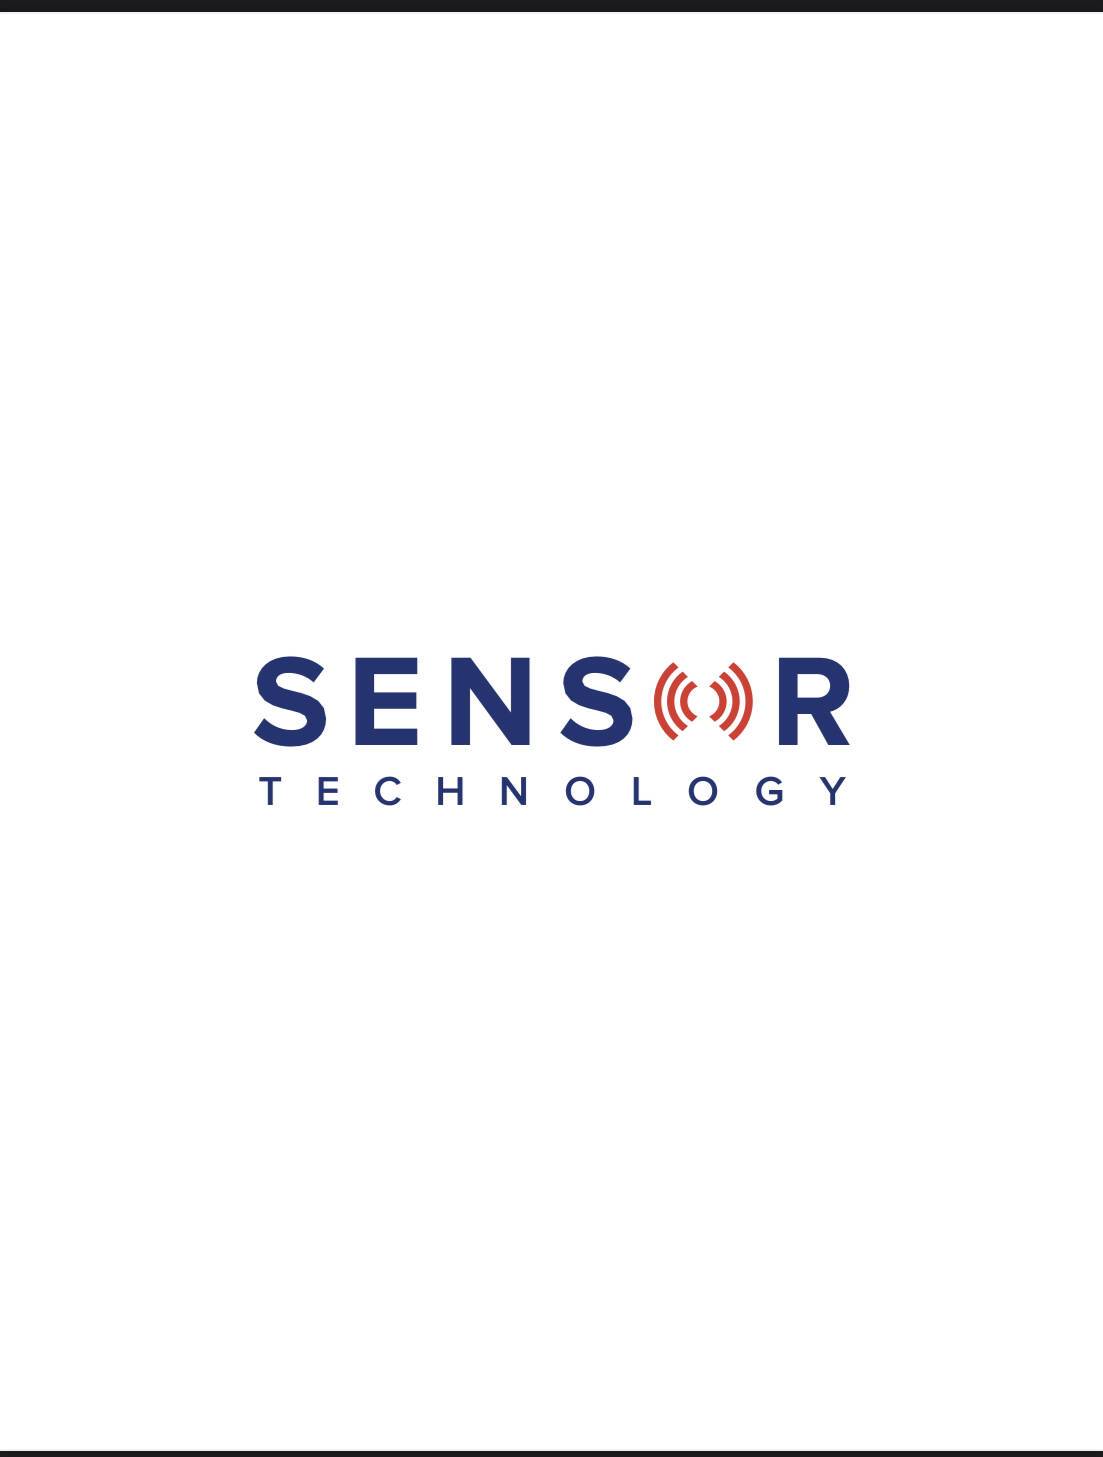 Sensor Technology Ltd.